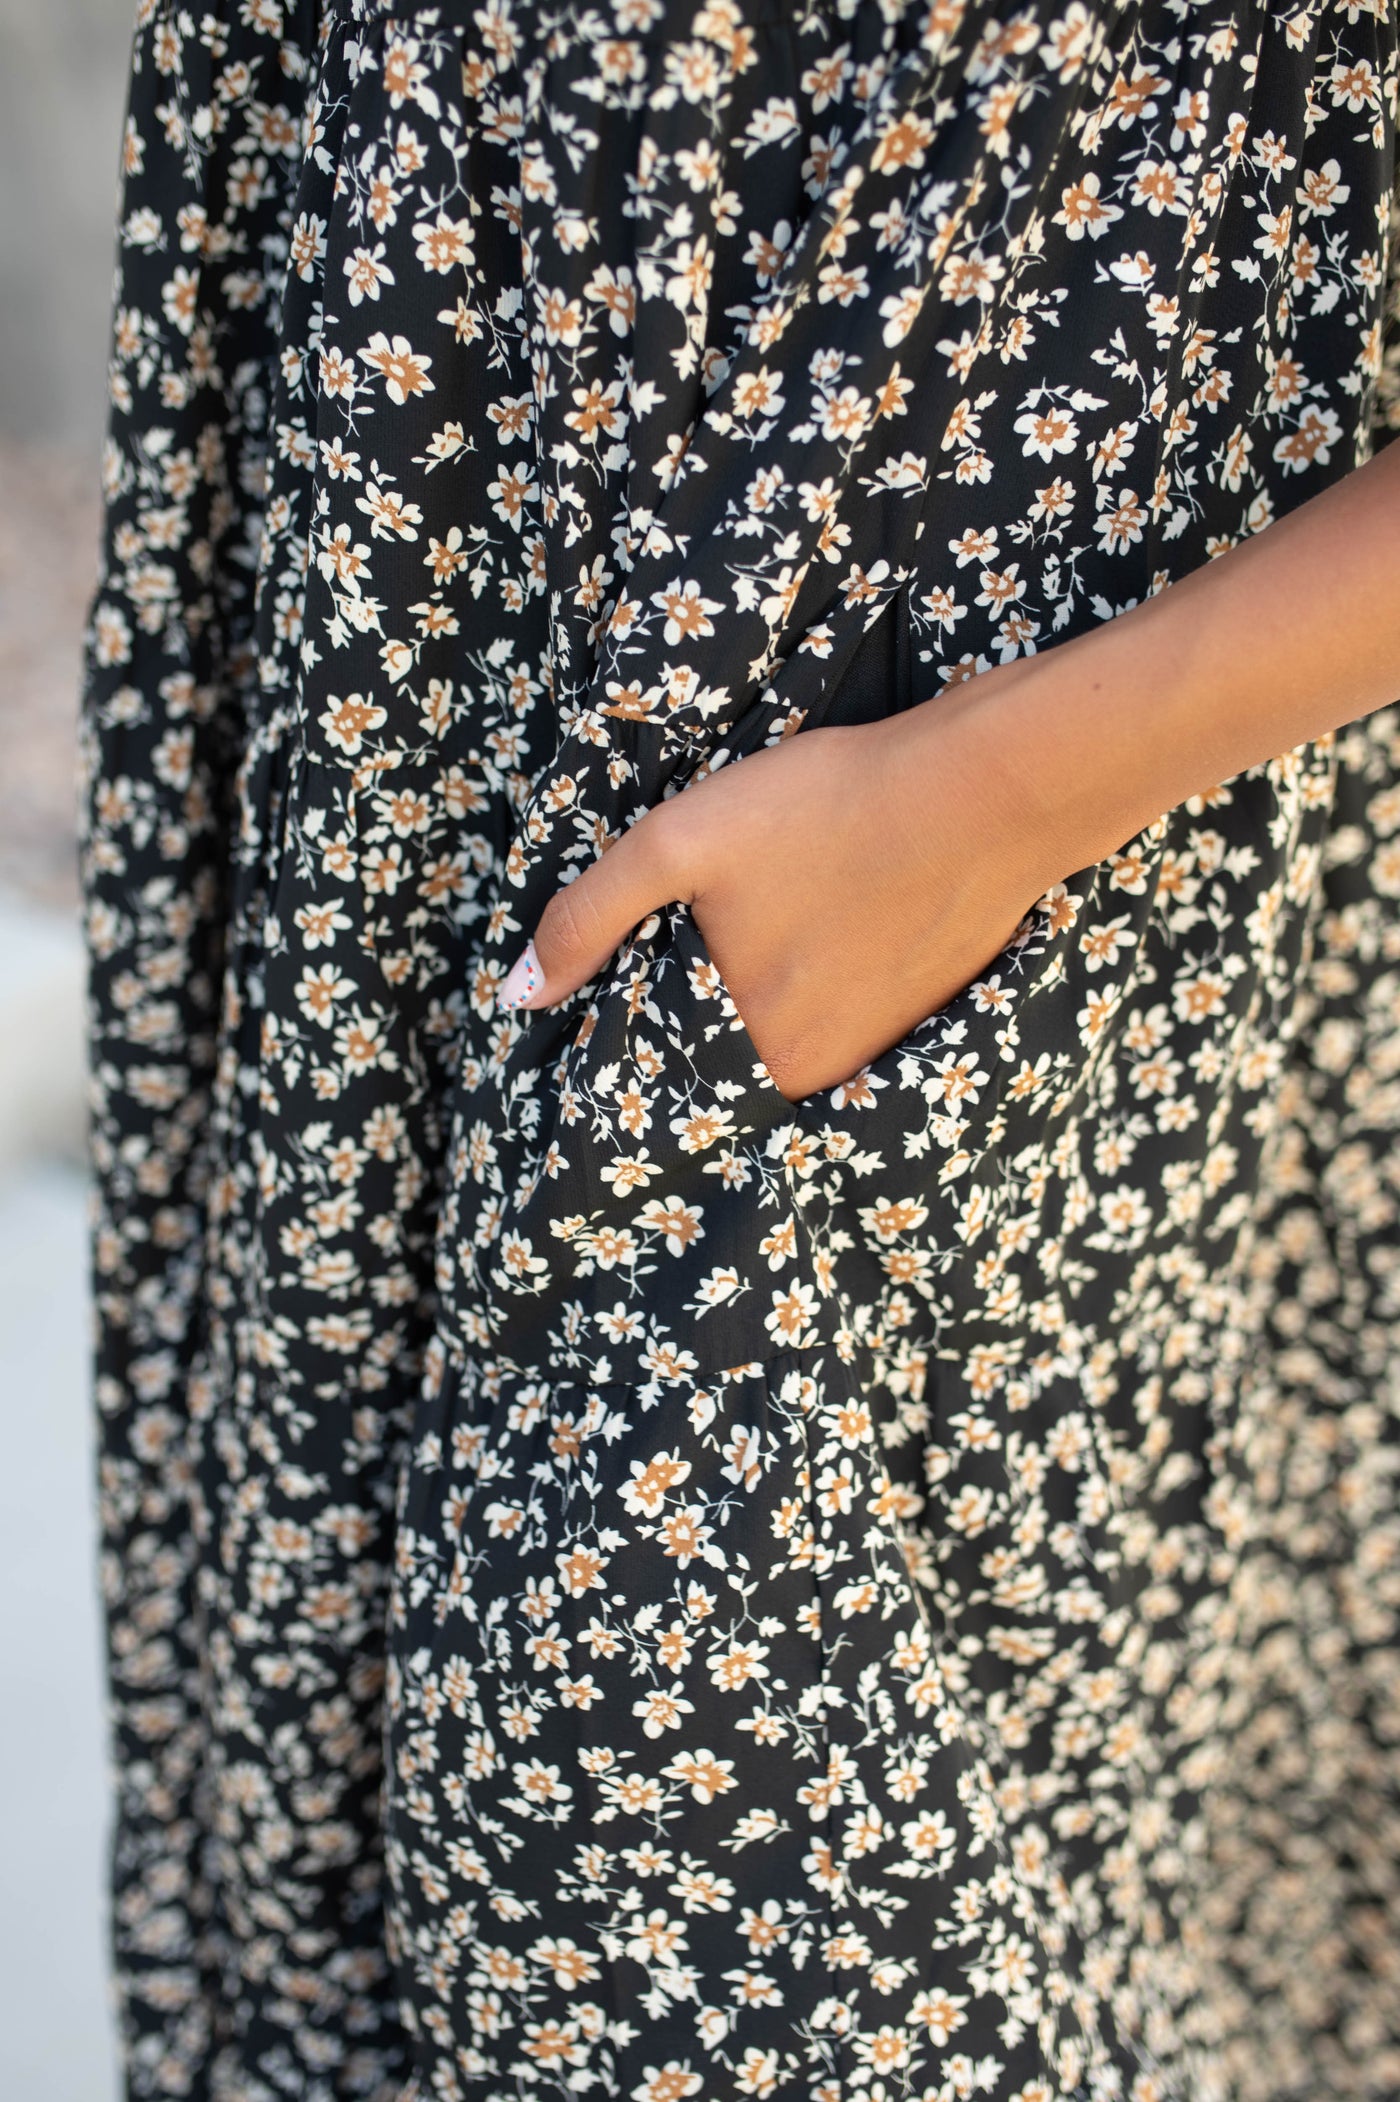 Black floral dress with pockets